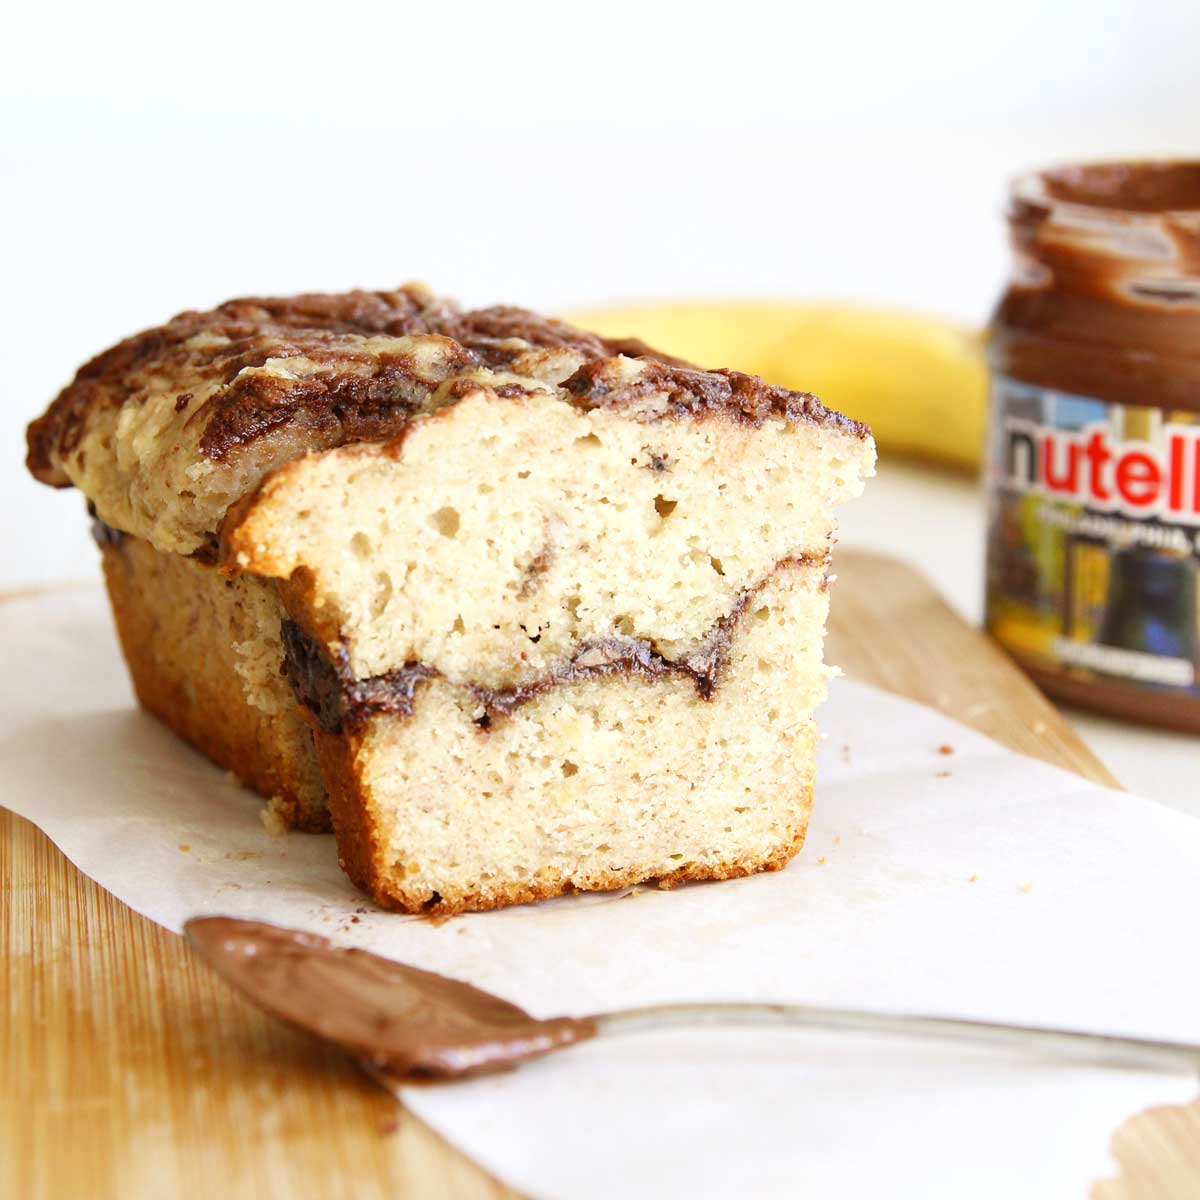 Super Moist Nutella Stuffed Banana Bread with Olive Oil & Almond Flour - Pumpkin Bread With Banana